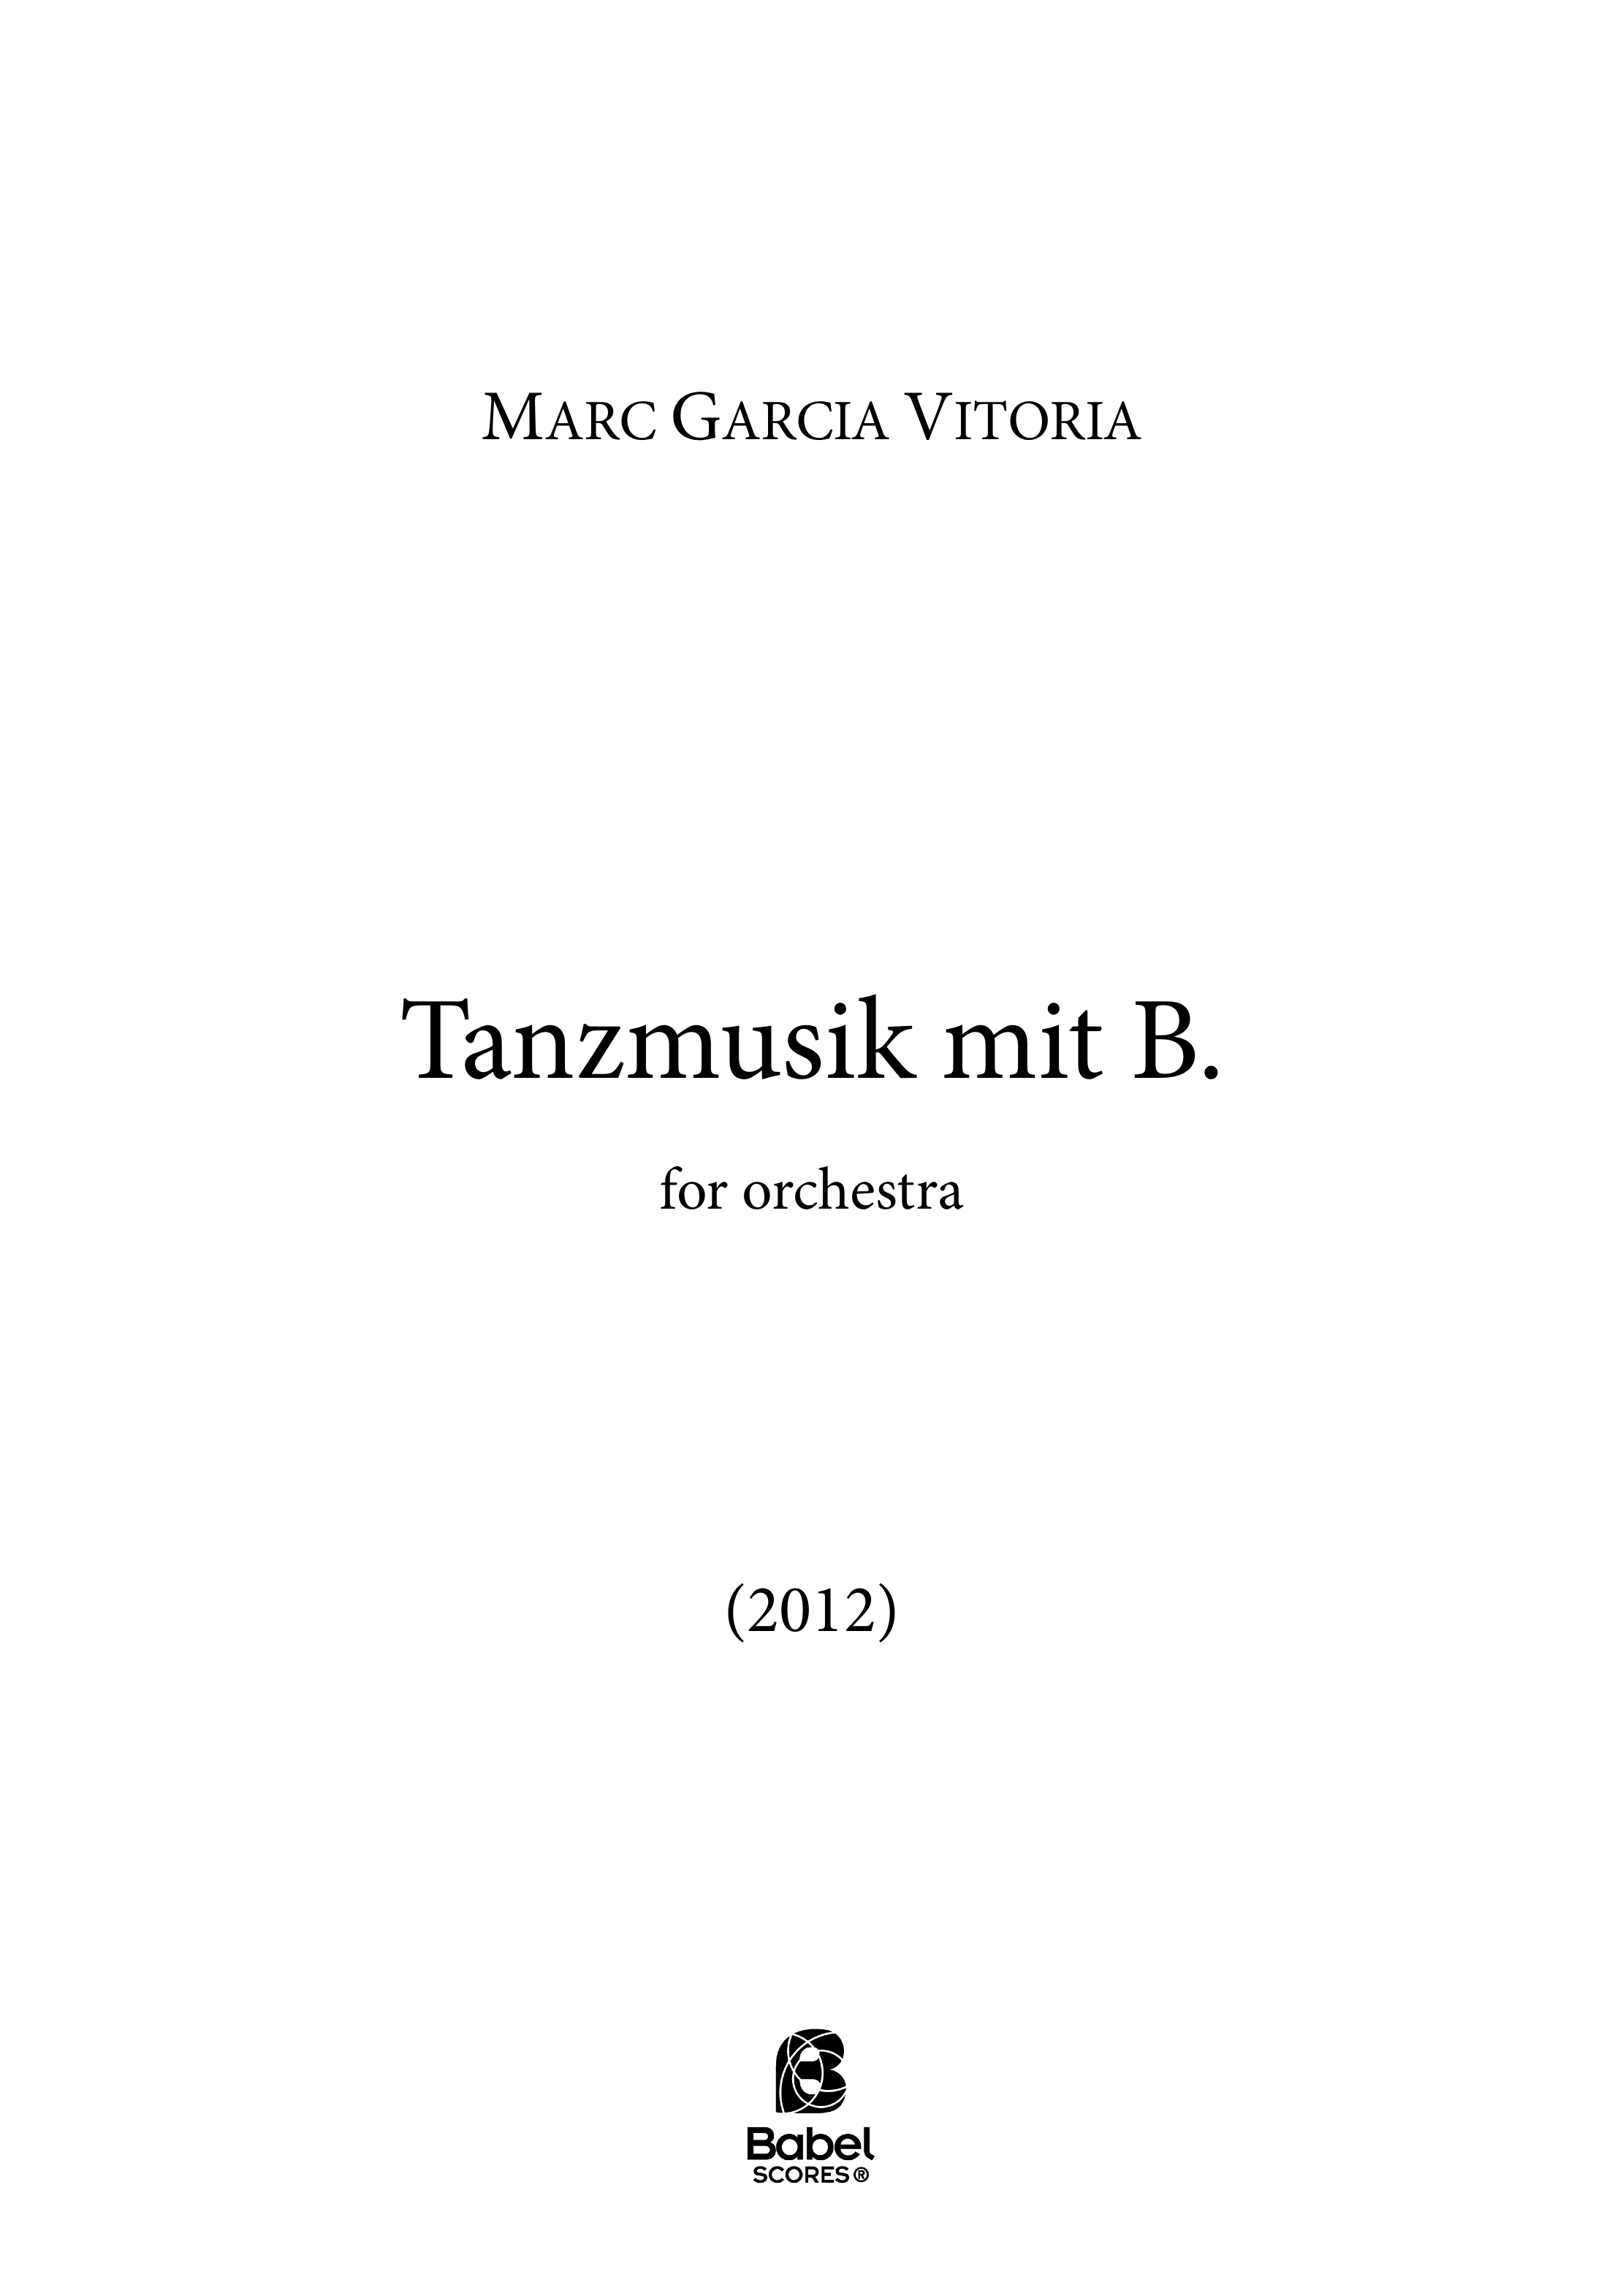 MGVitoria TanzmusikmitB A3 z